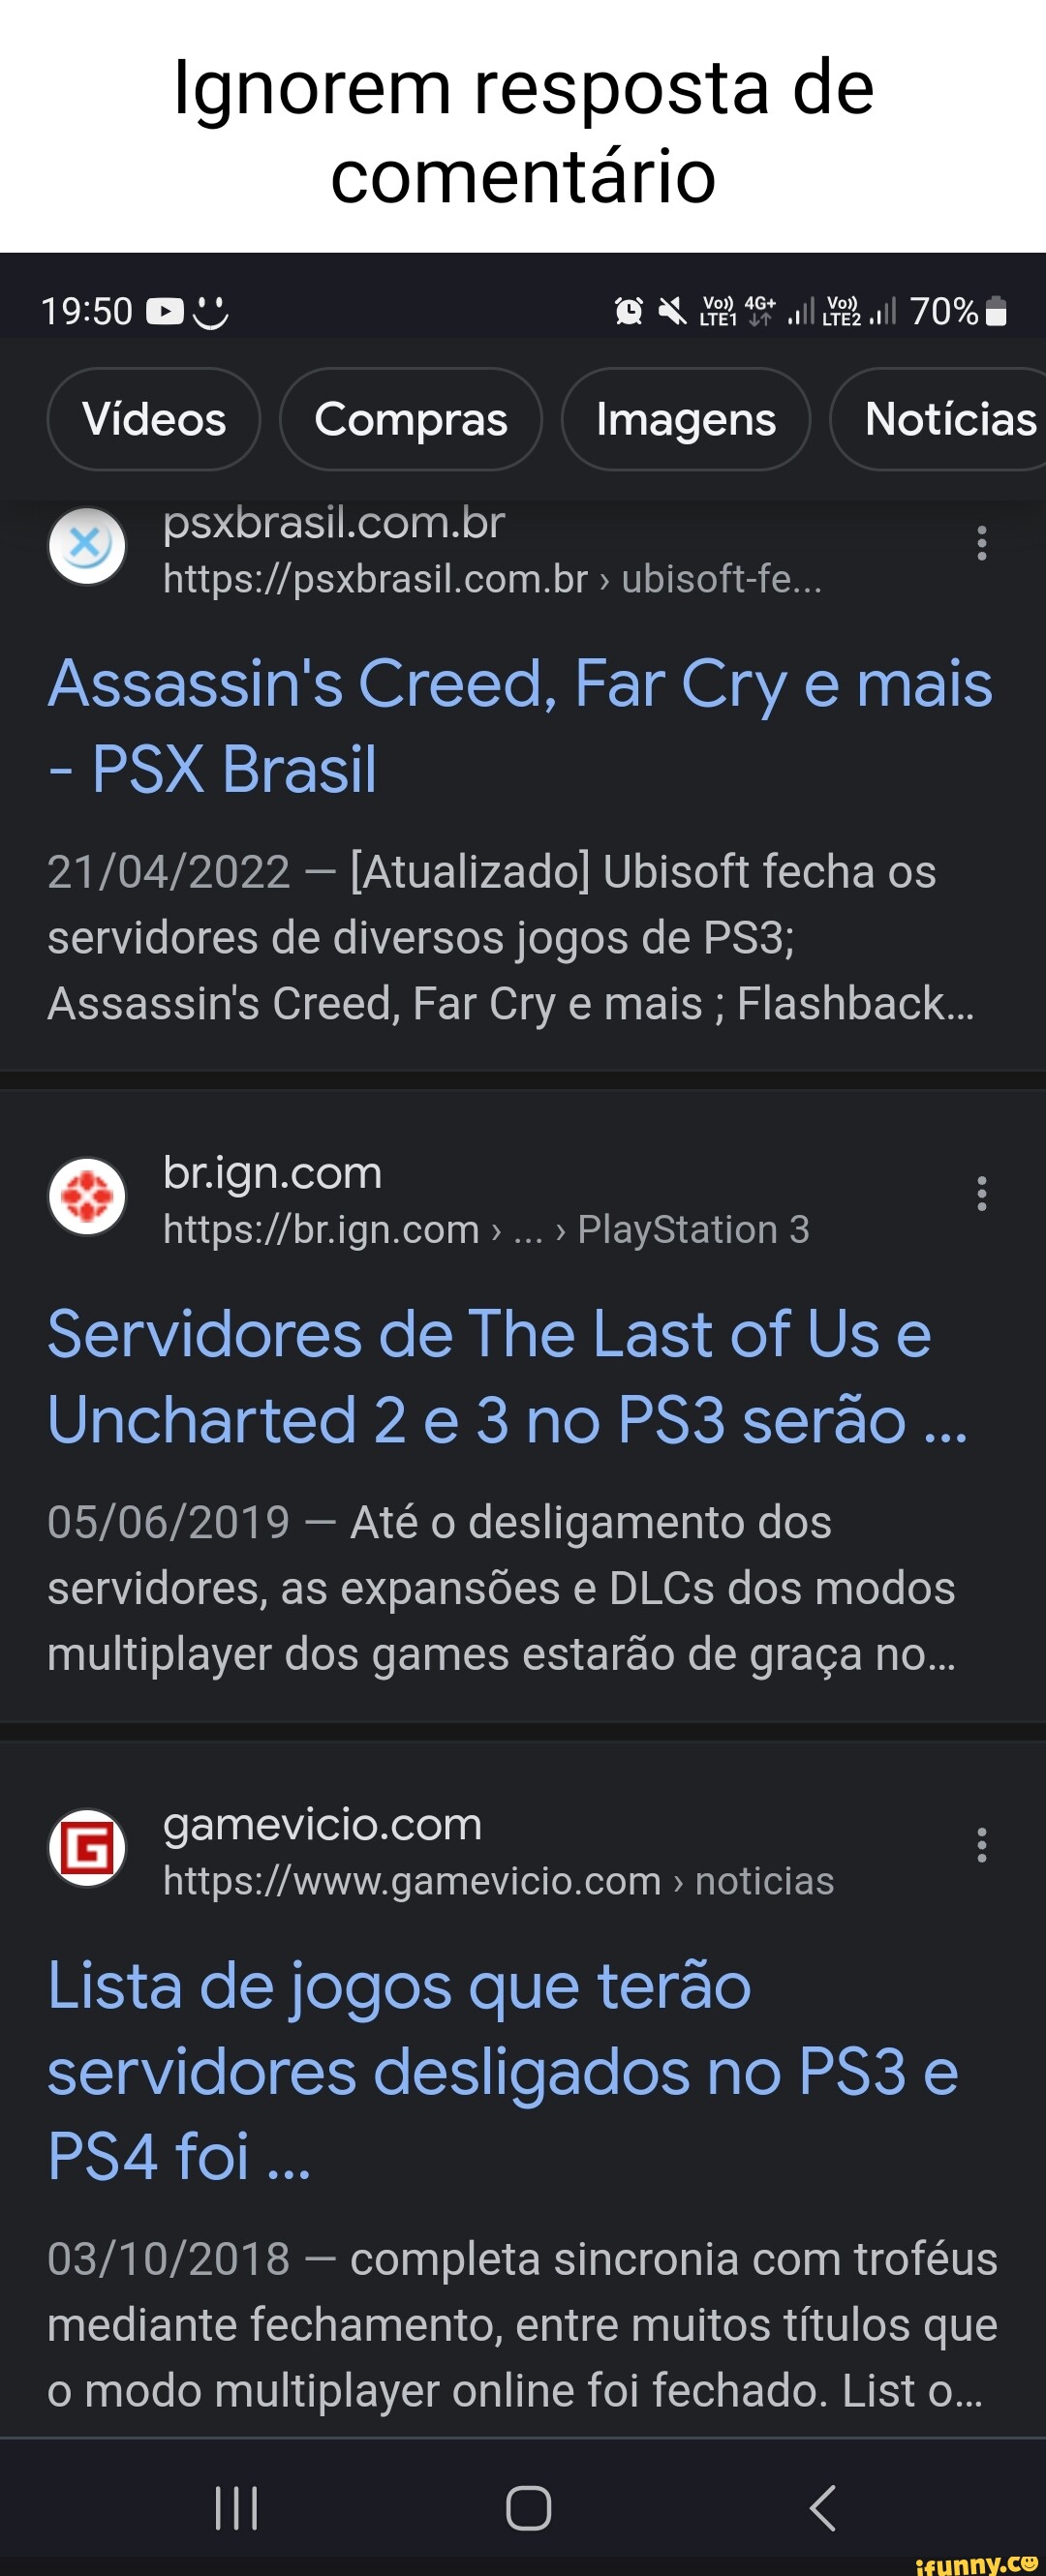 Melhores Jogos e DLCs de 2019 - PSX Brasil - PSX Brasil